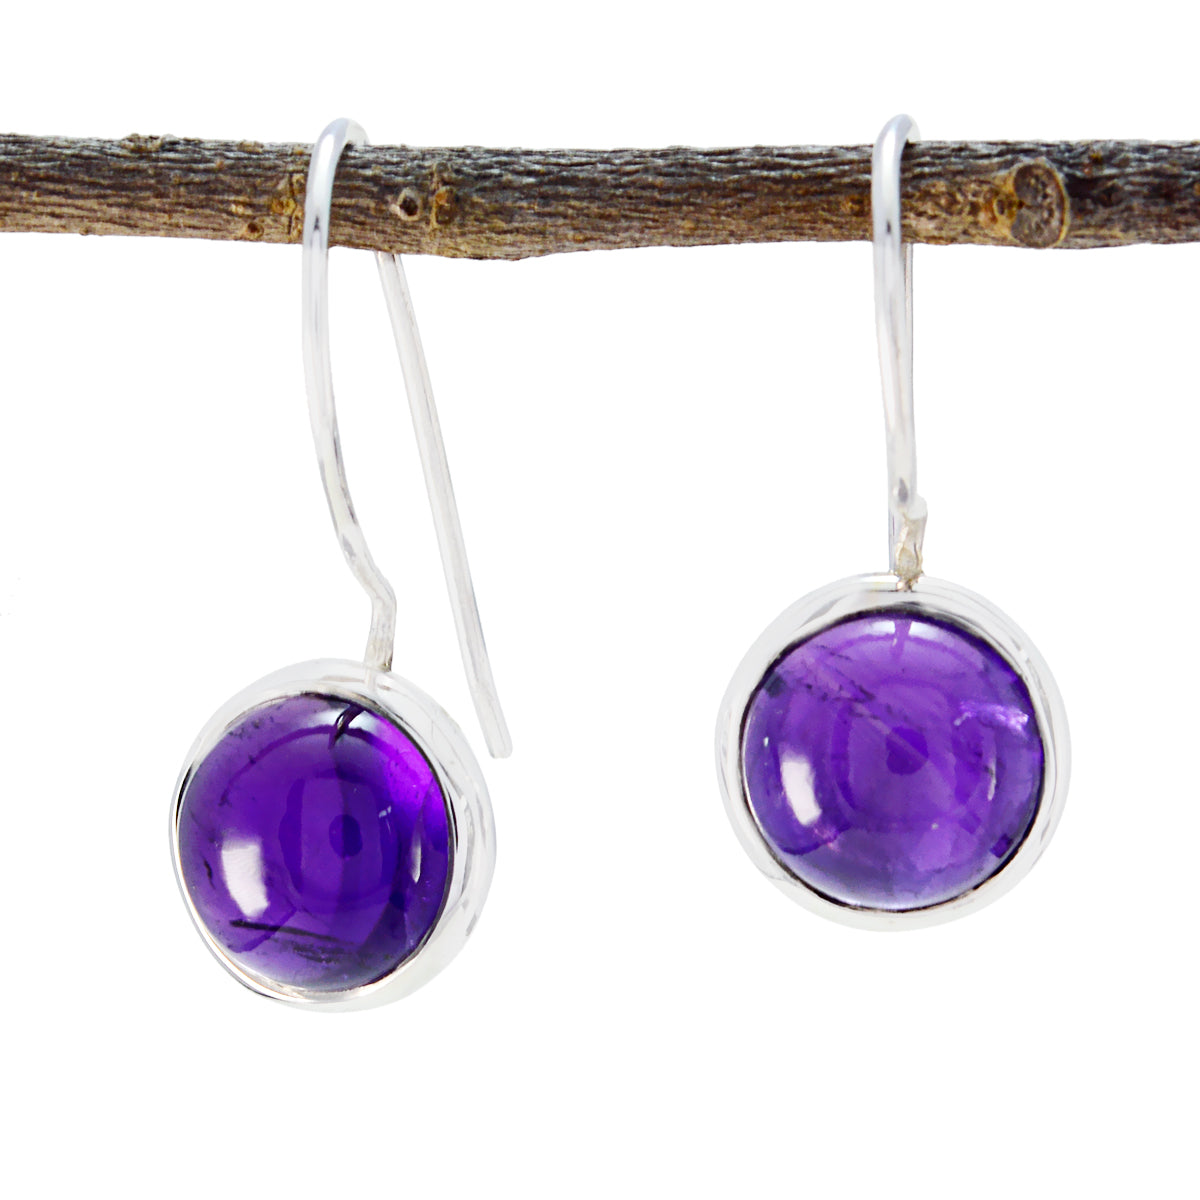 Riyo Real Gemstones round Cabochon Purple Amethyst Silver Earrings gift for graduation